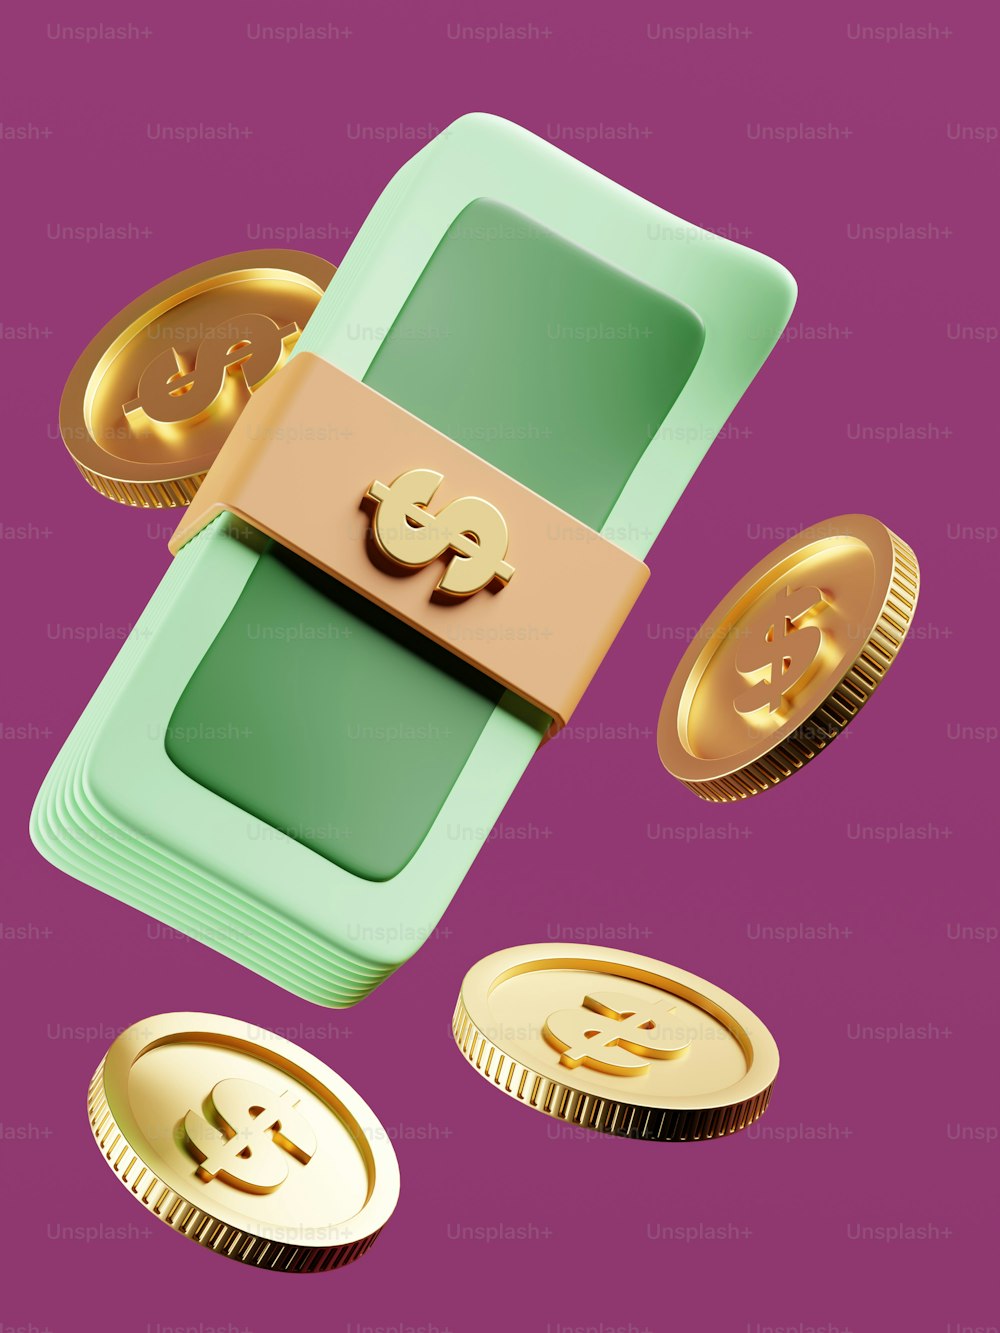 Un estuche verde con un bitcoin de oro encima